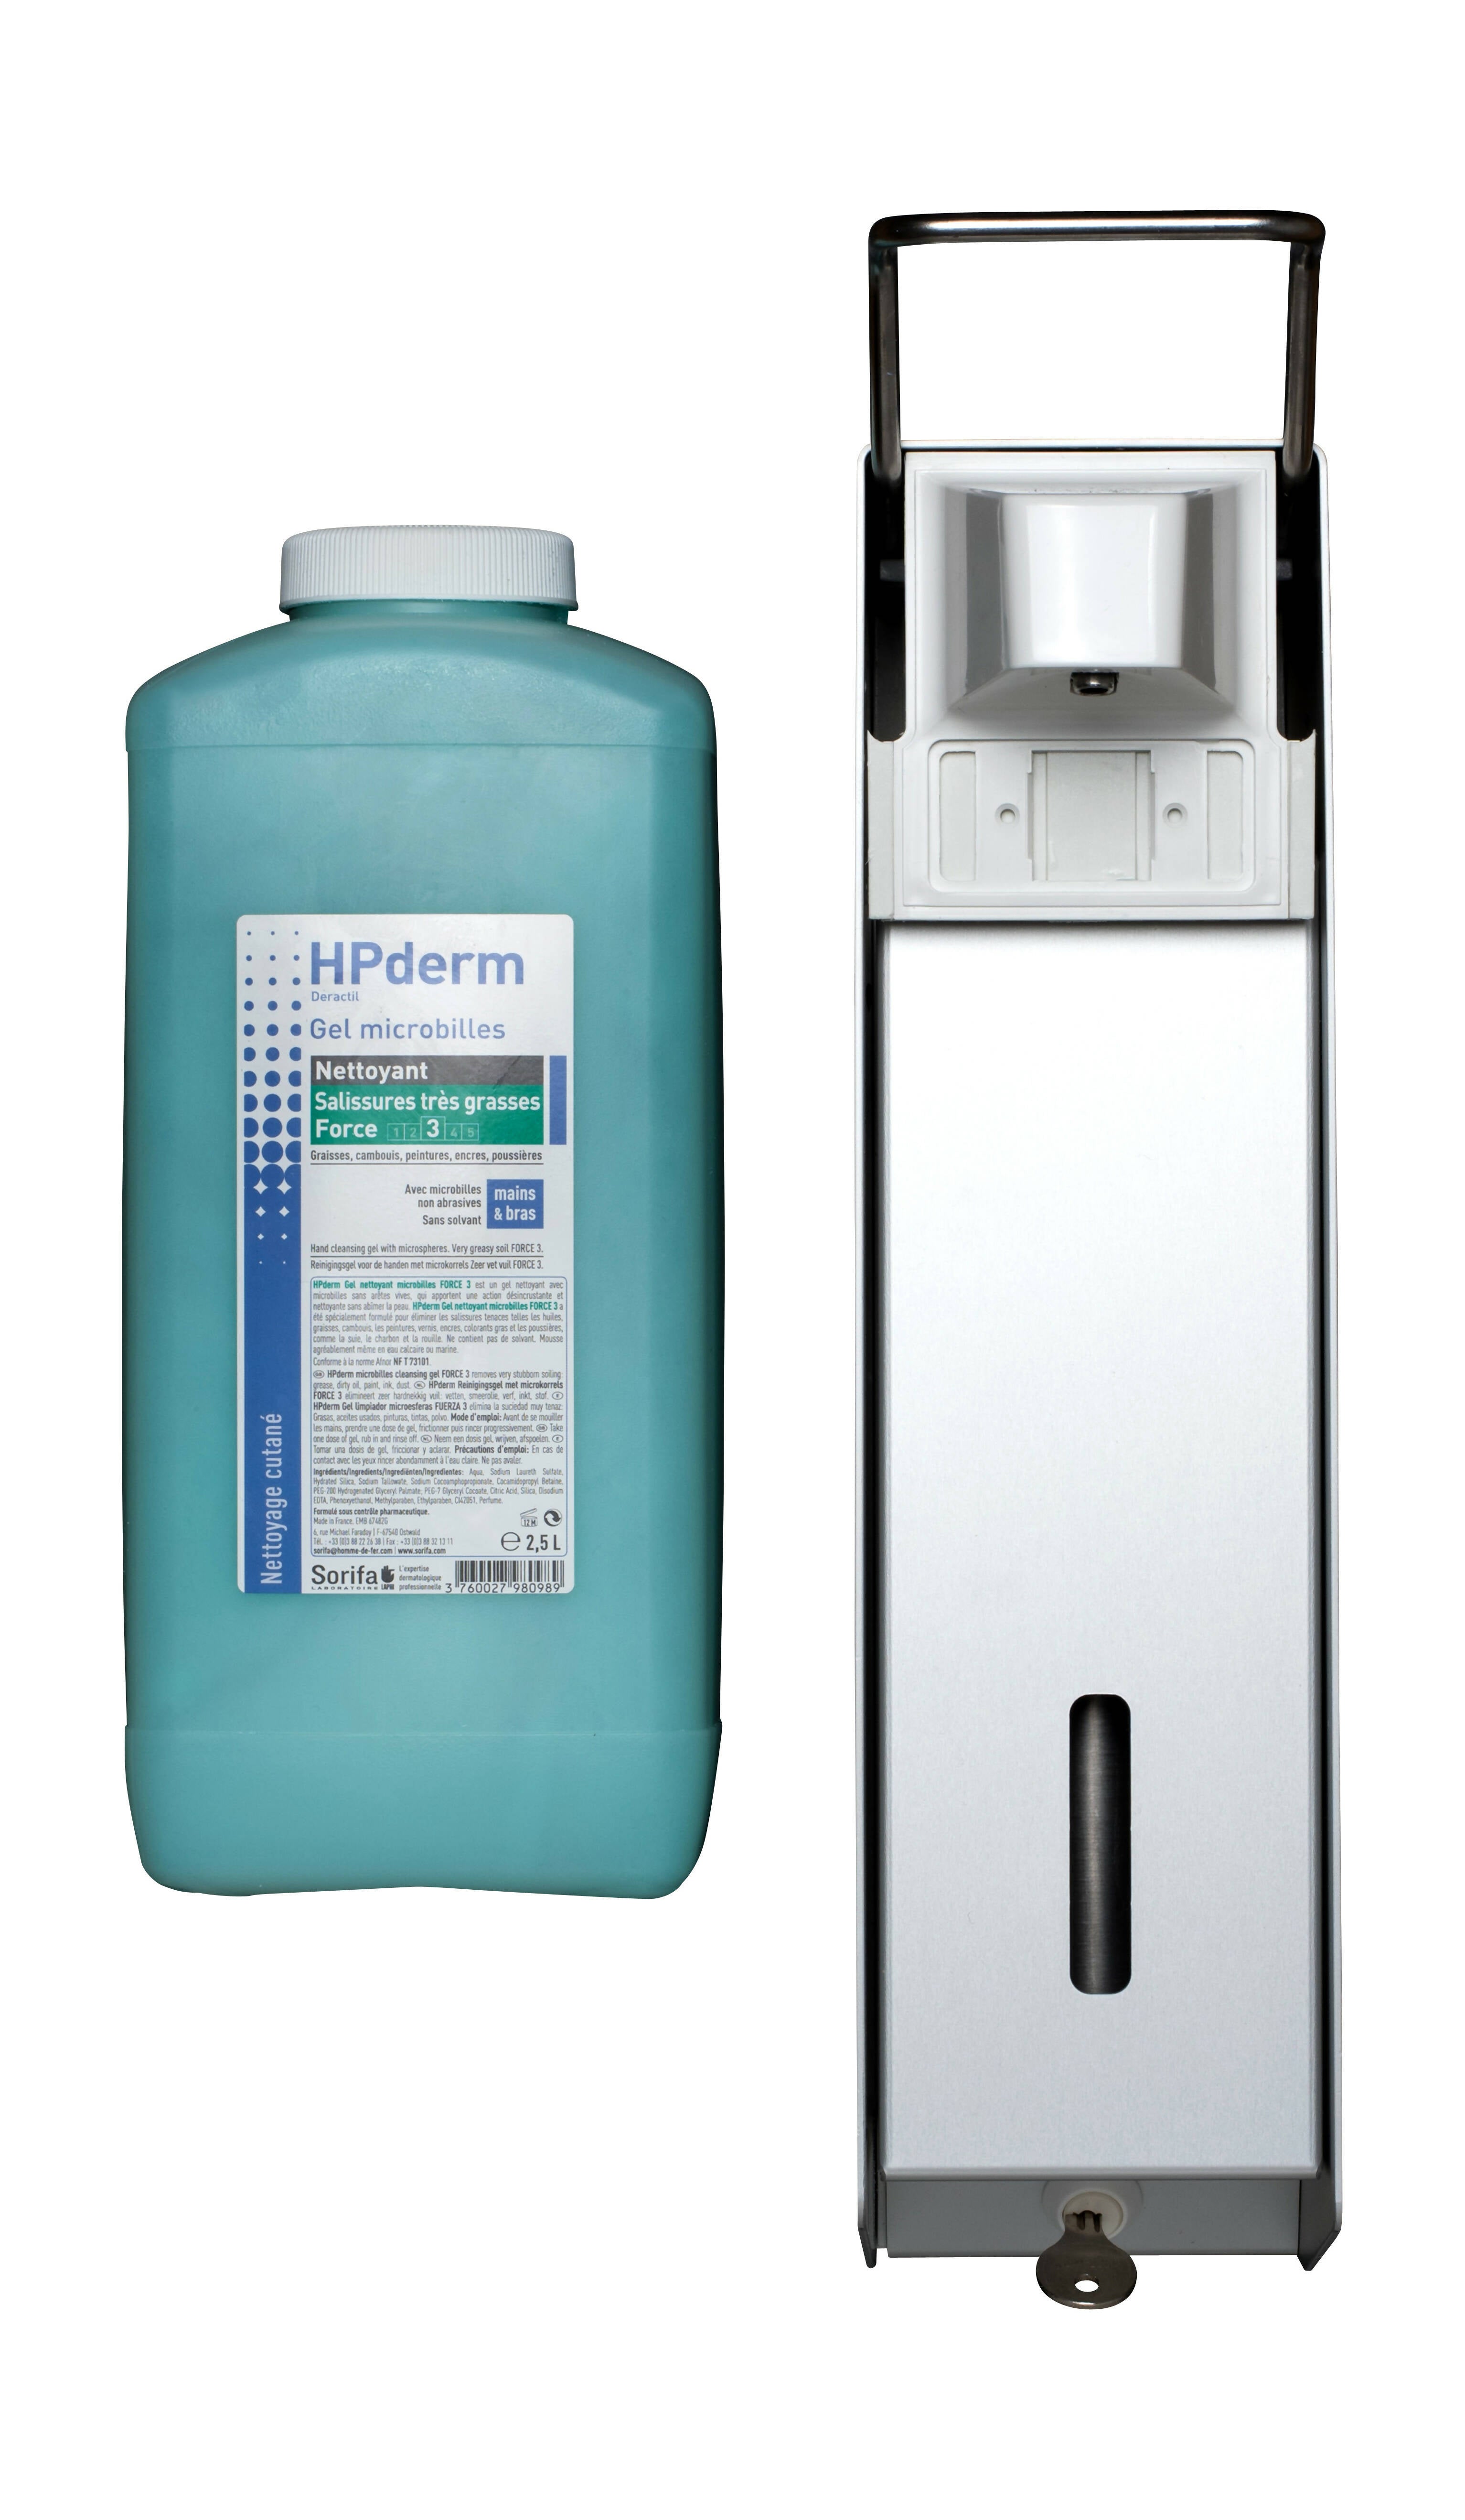 SORIFA - Set of 5 - Robust, ergonomic, lockable metal wall dispenser for 2.5L SORIFA brand bottle - For gels and liquid soaps.